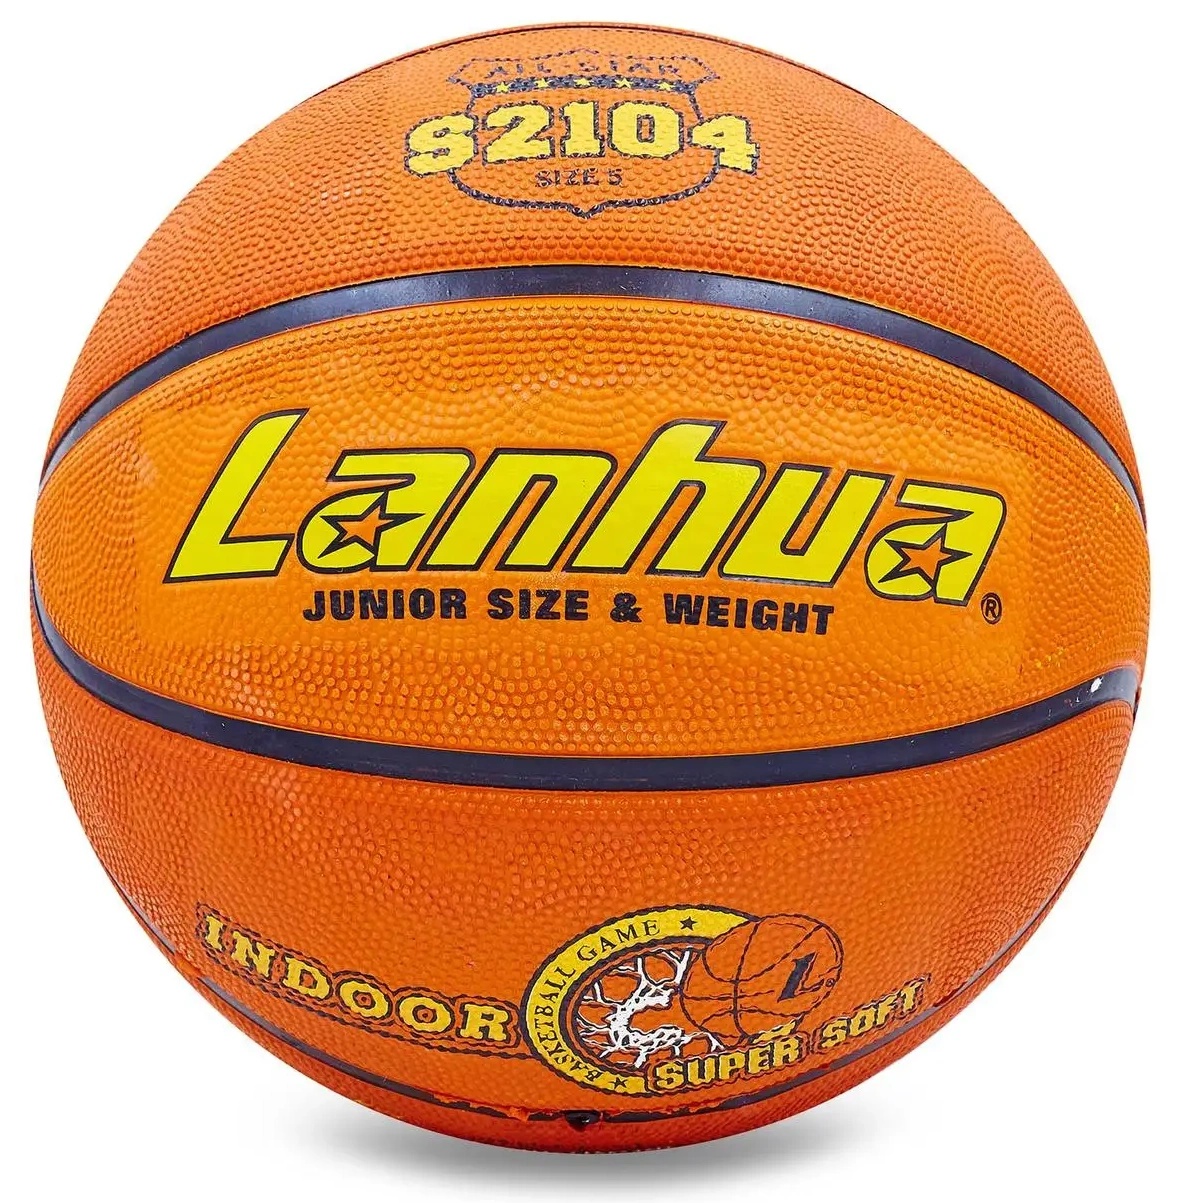 Мяч баскетбольный Lanhua U2104 N5